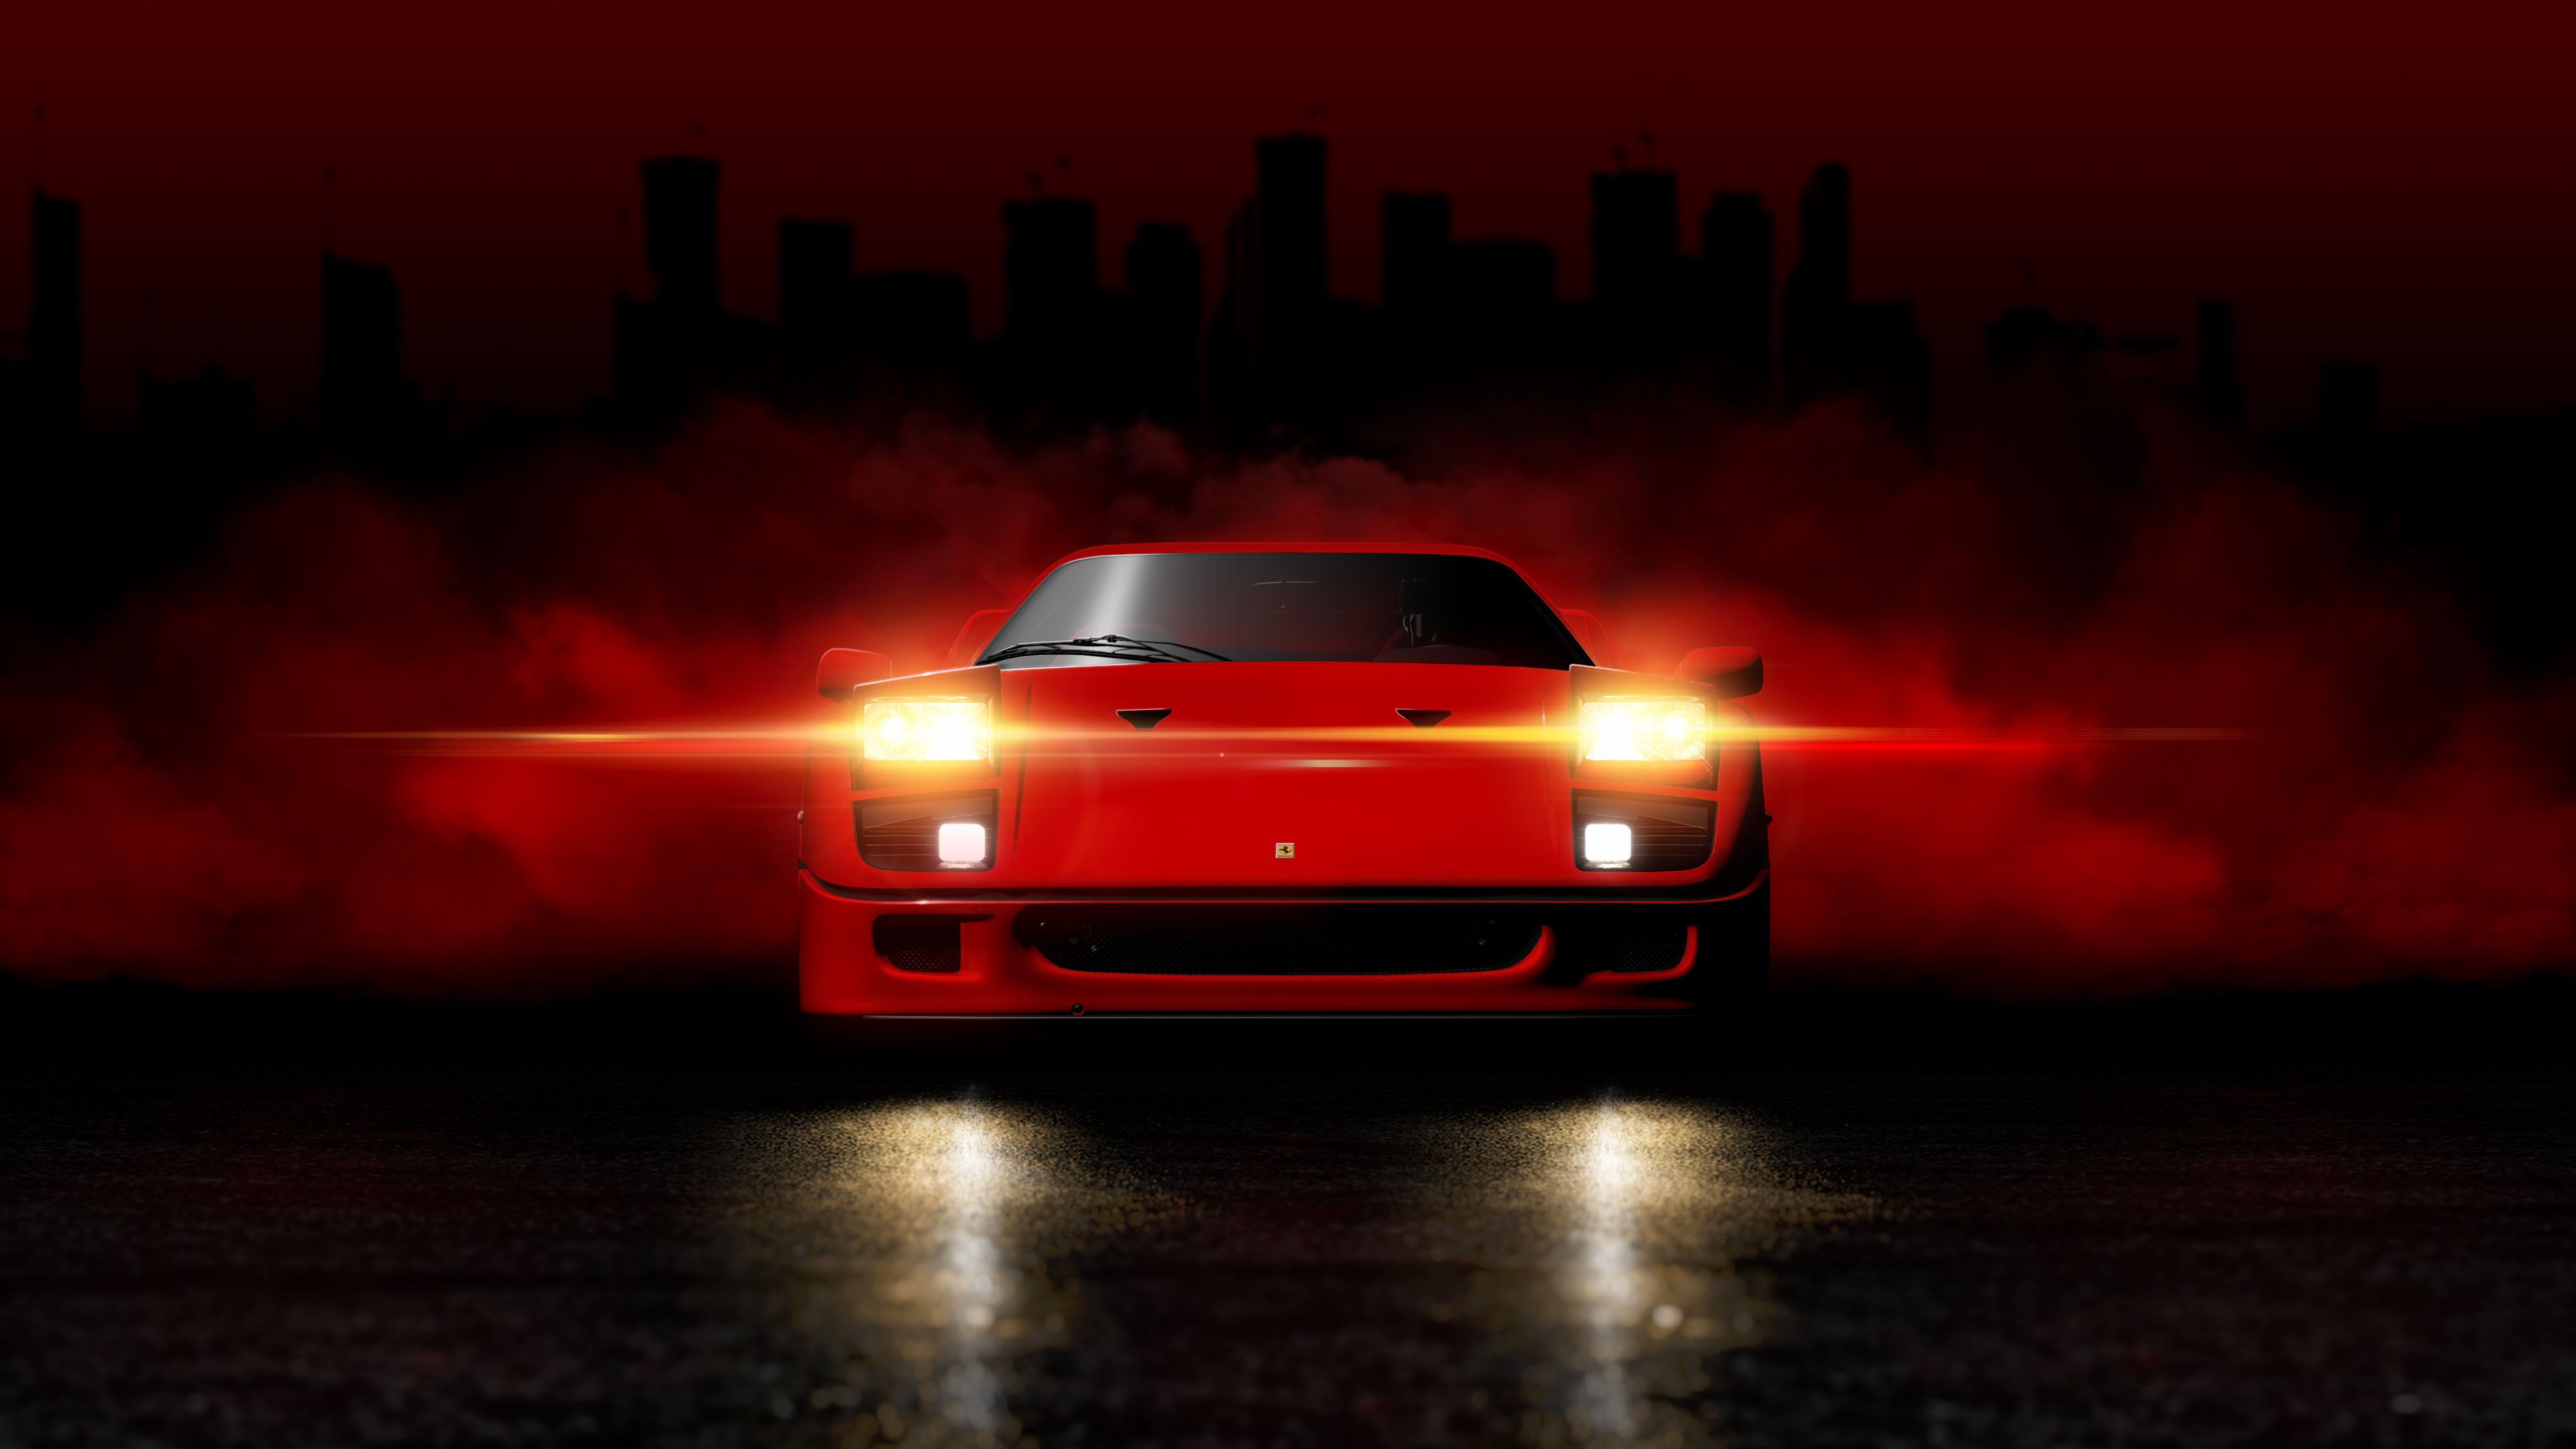 Gran Turismo 6 Ferrari 4k, HD Cars, 4k Wallpaper, Image, Background, Photo and Picture